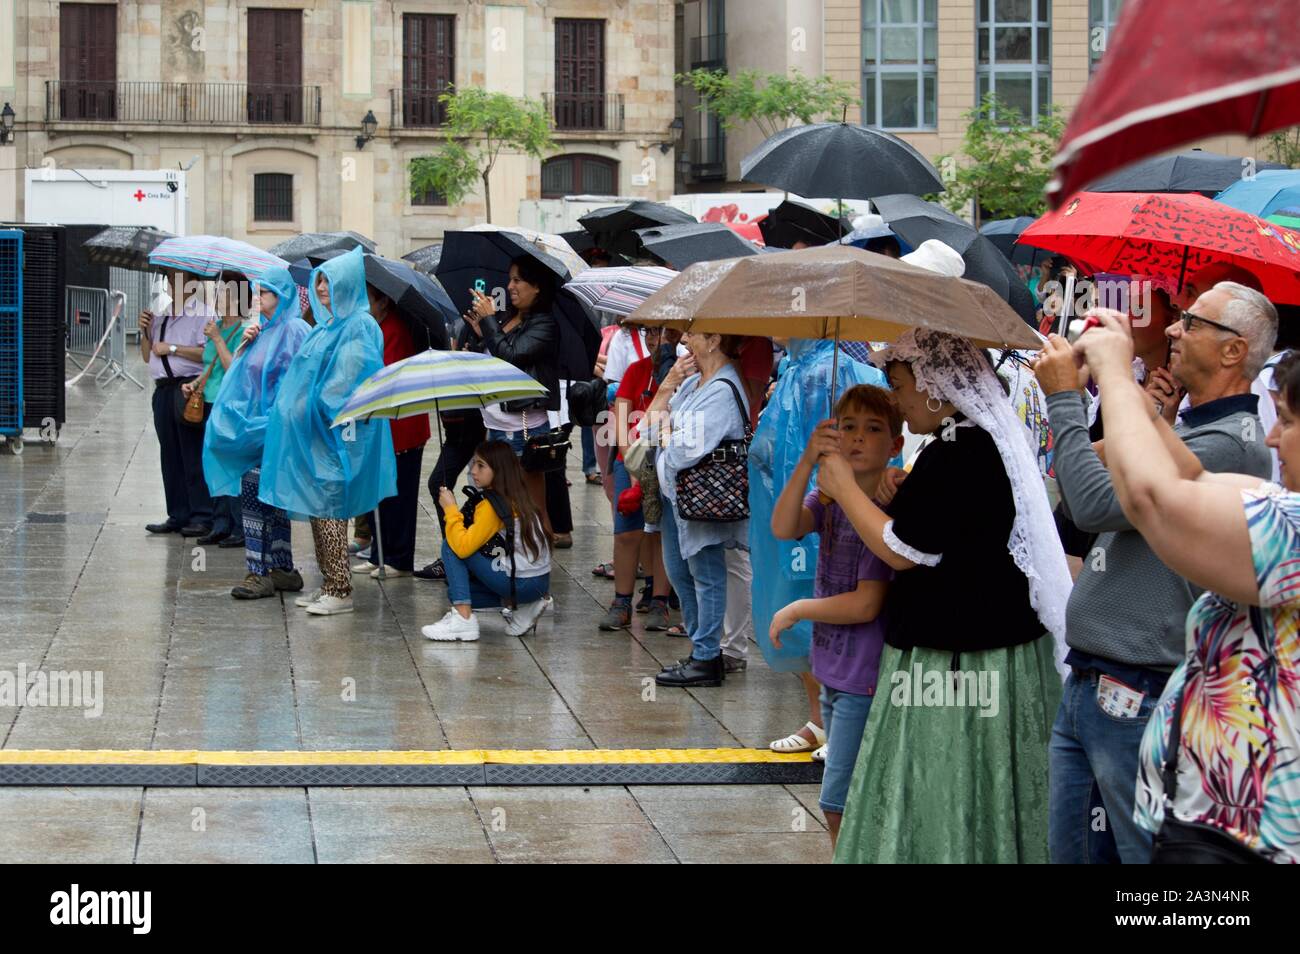 Spectators watching a performance in the rain at La Merce Festival in Barcelona, Spain Stock Photo